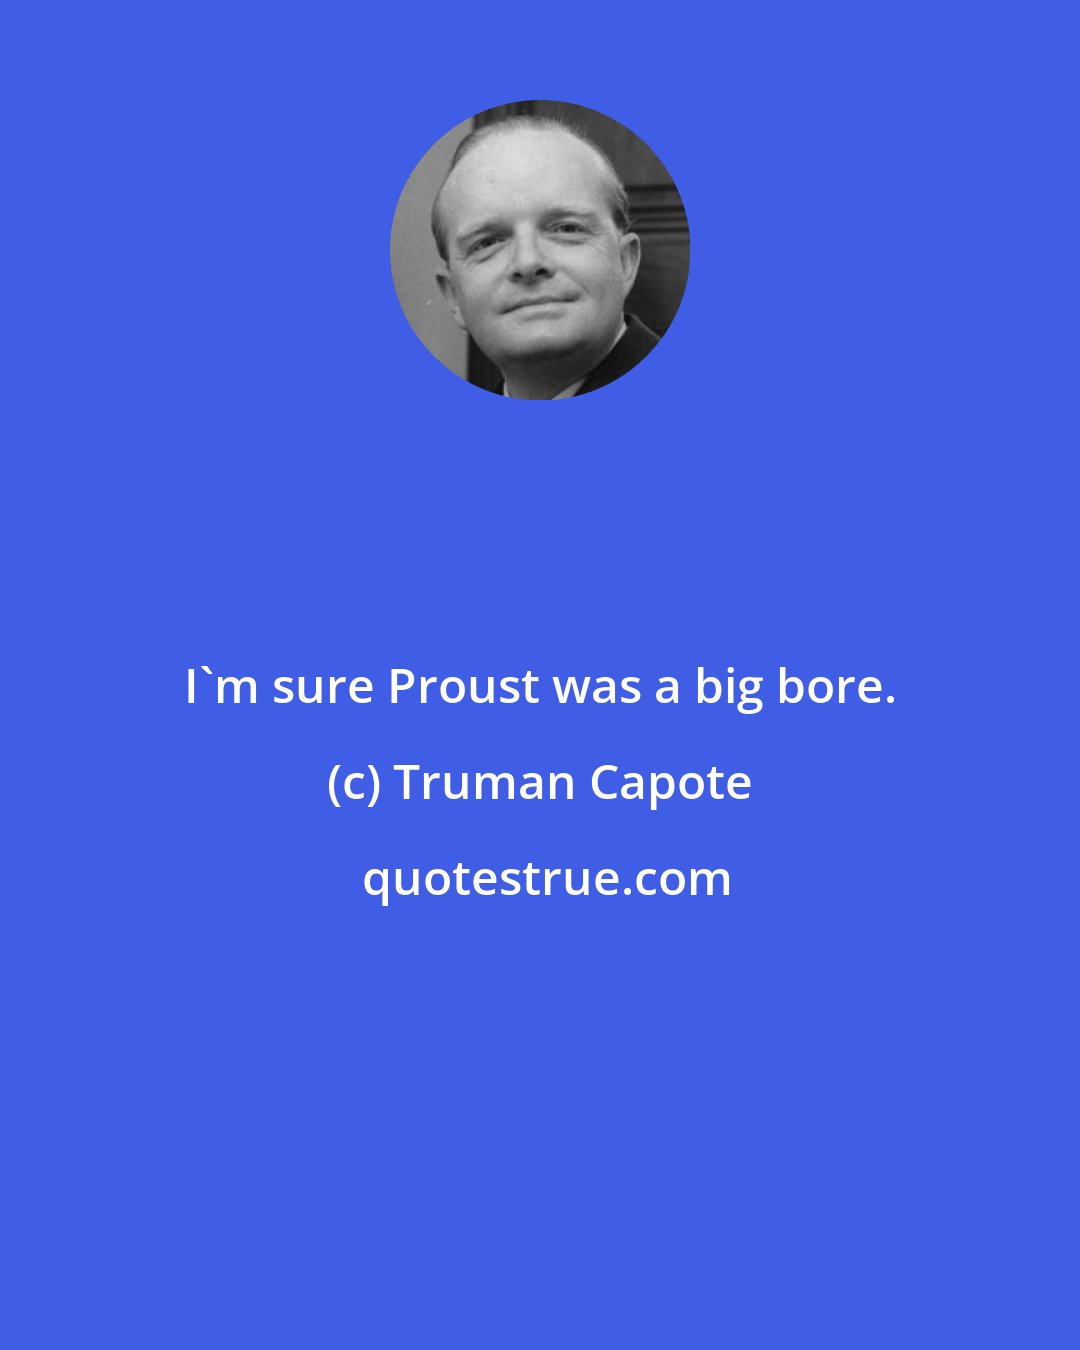 Truman Capote: I'm sure Proust was a big bore.